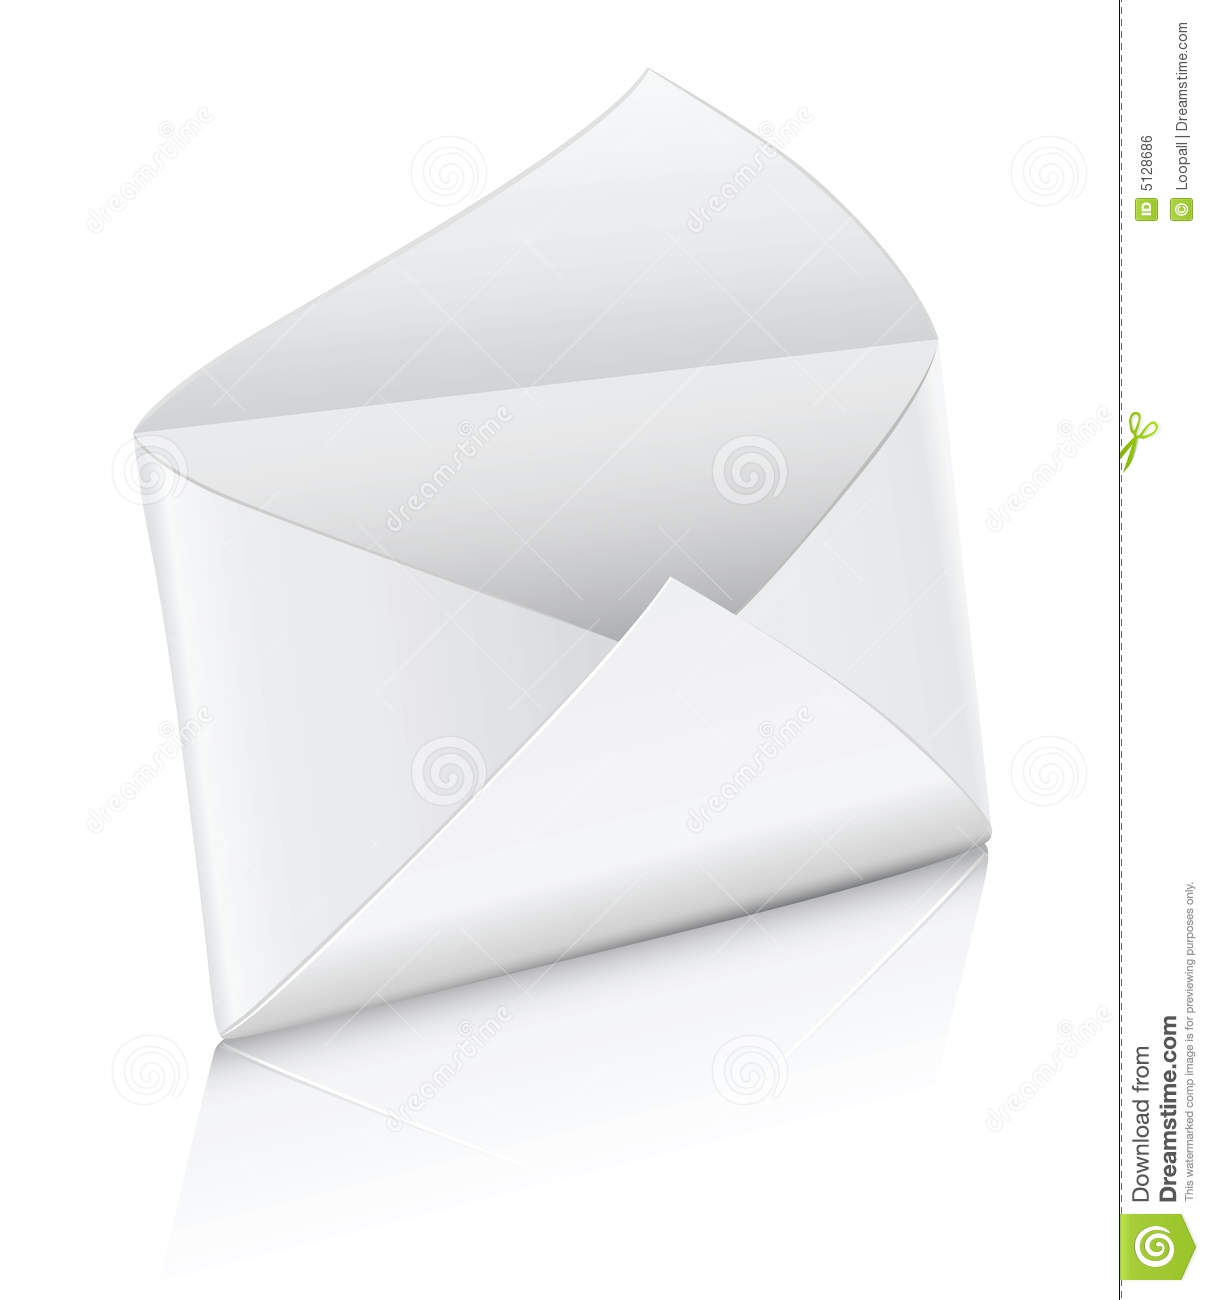 Mail Envelope Icon